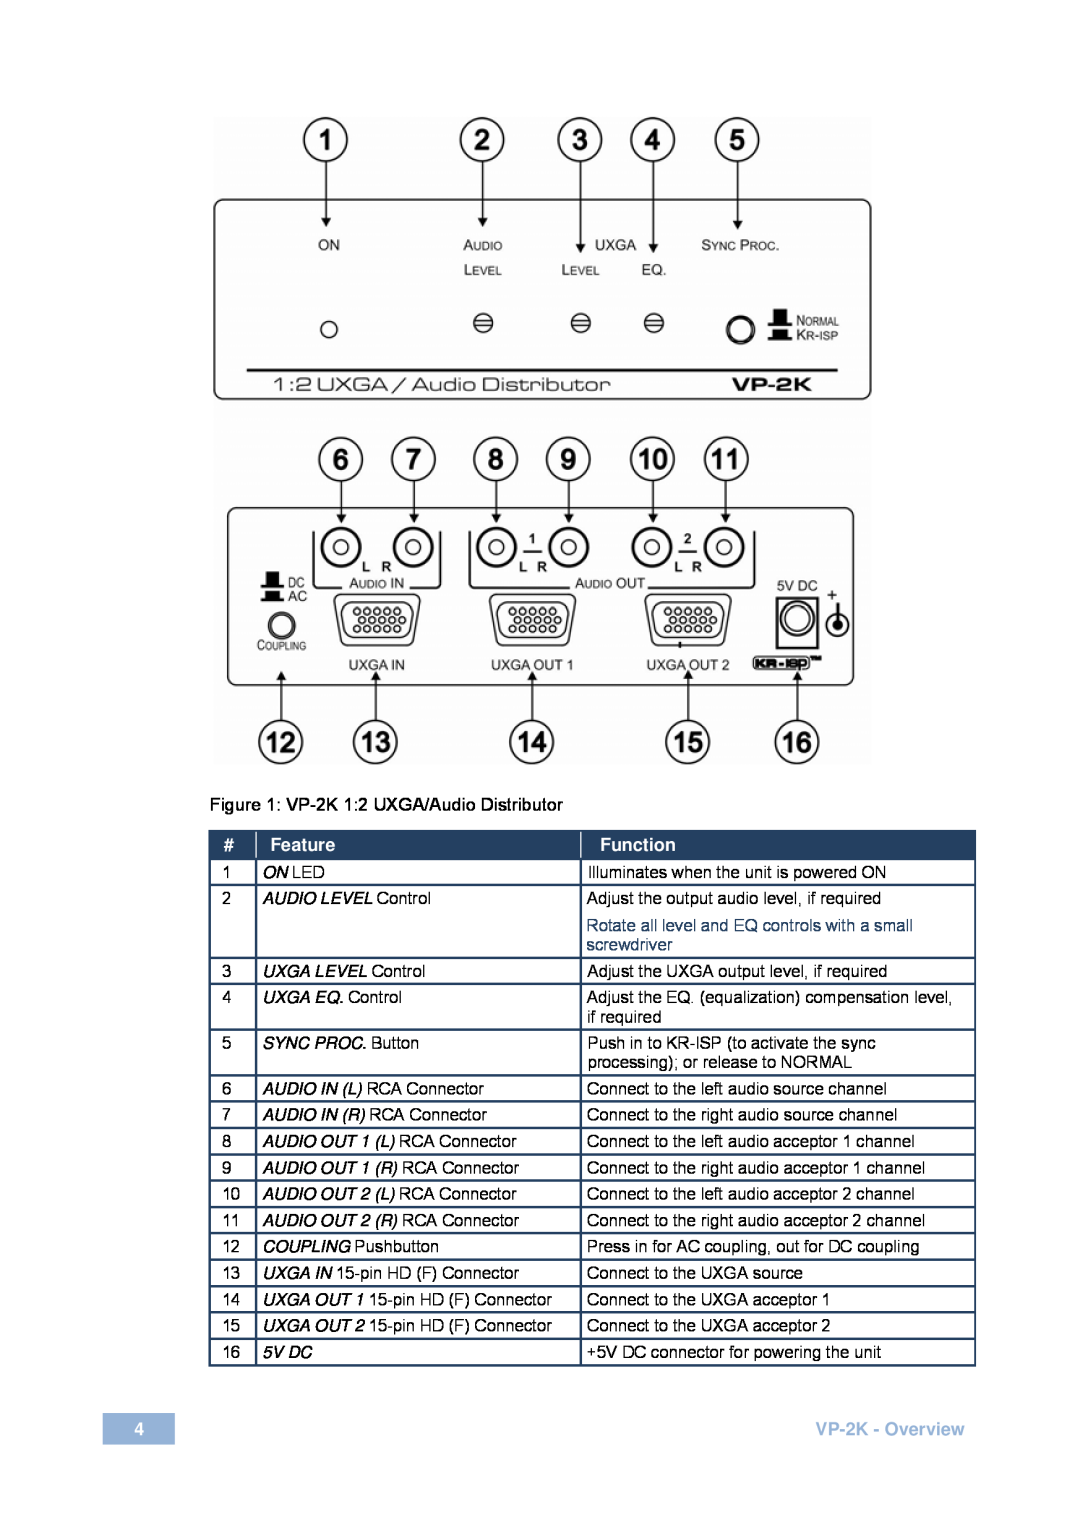 Kramer Electronics 2900-000490 Rev 3 user manual Feature, Function, VP-2K- Overview 